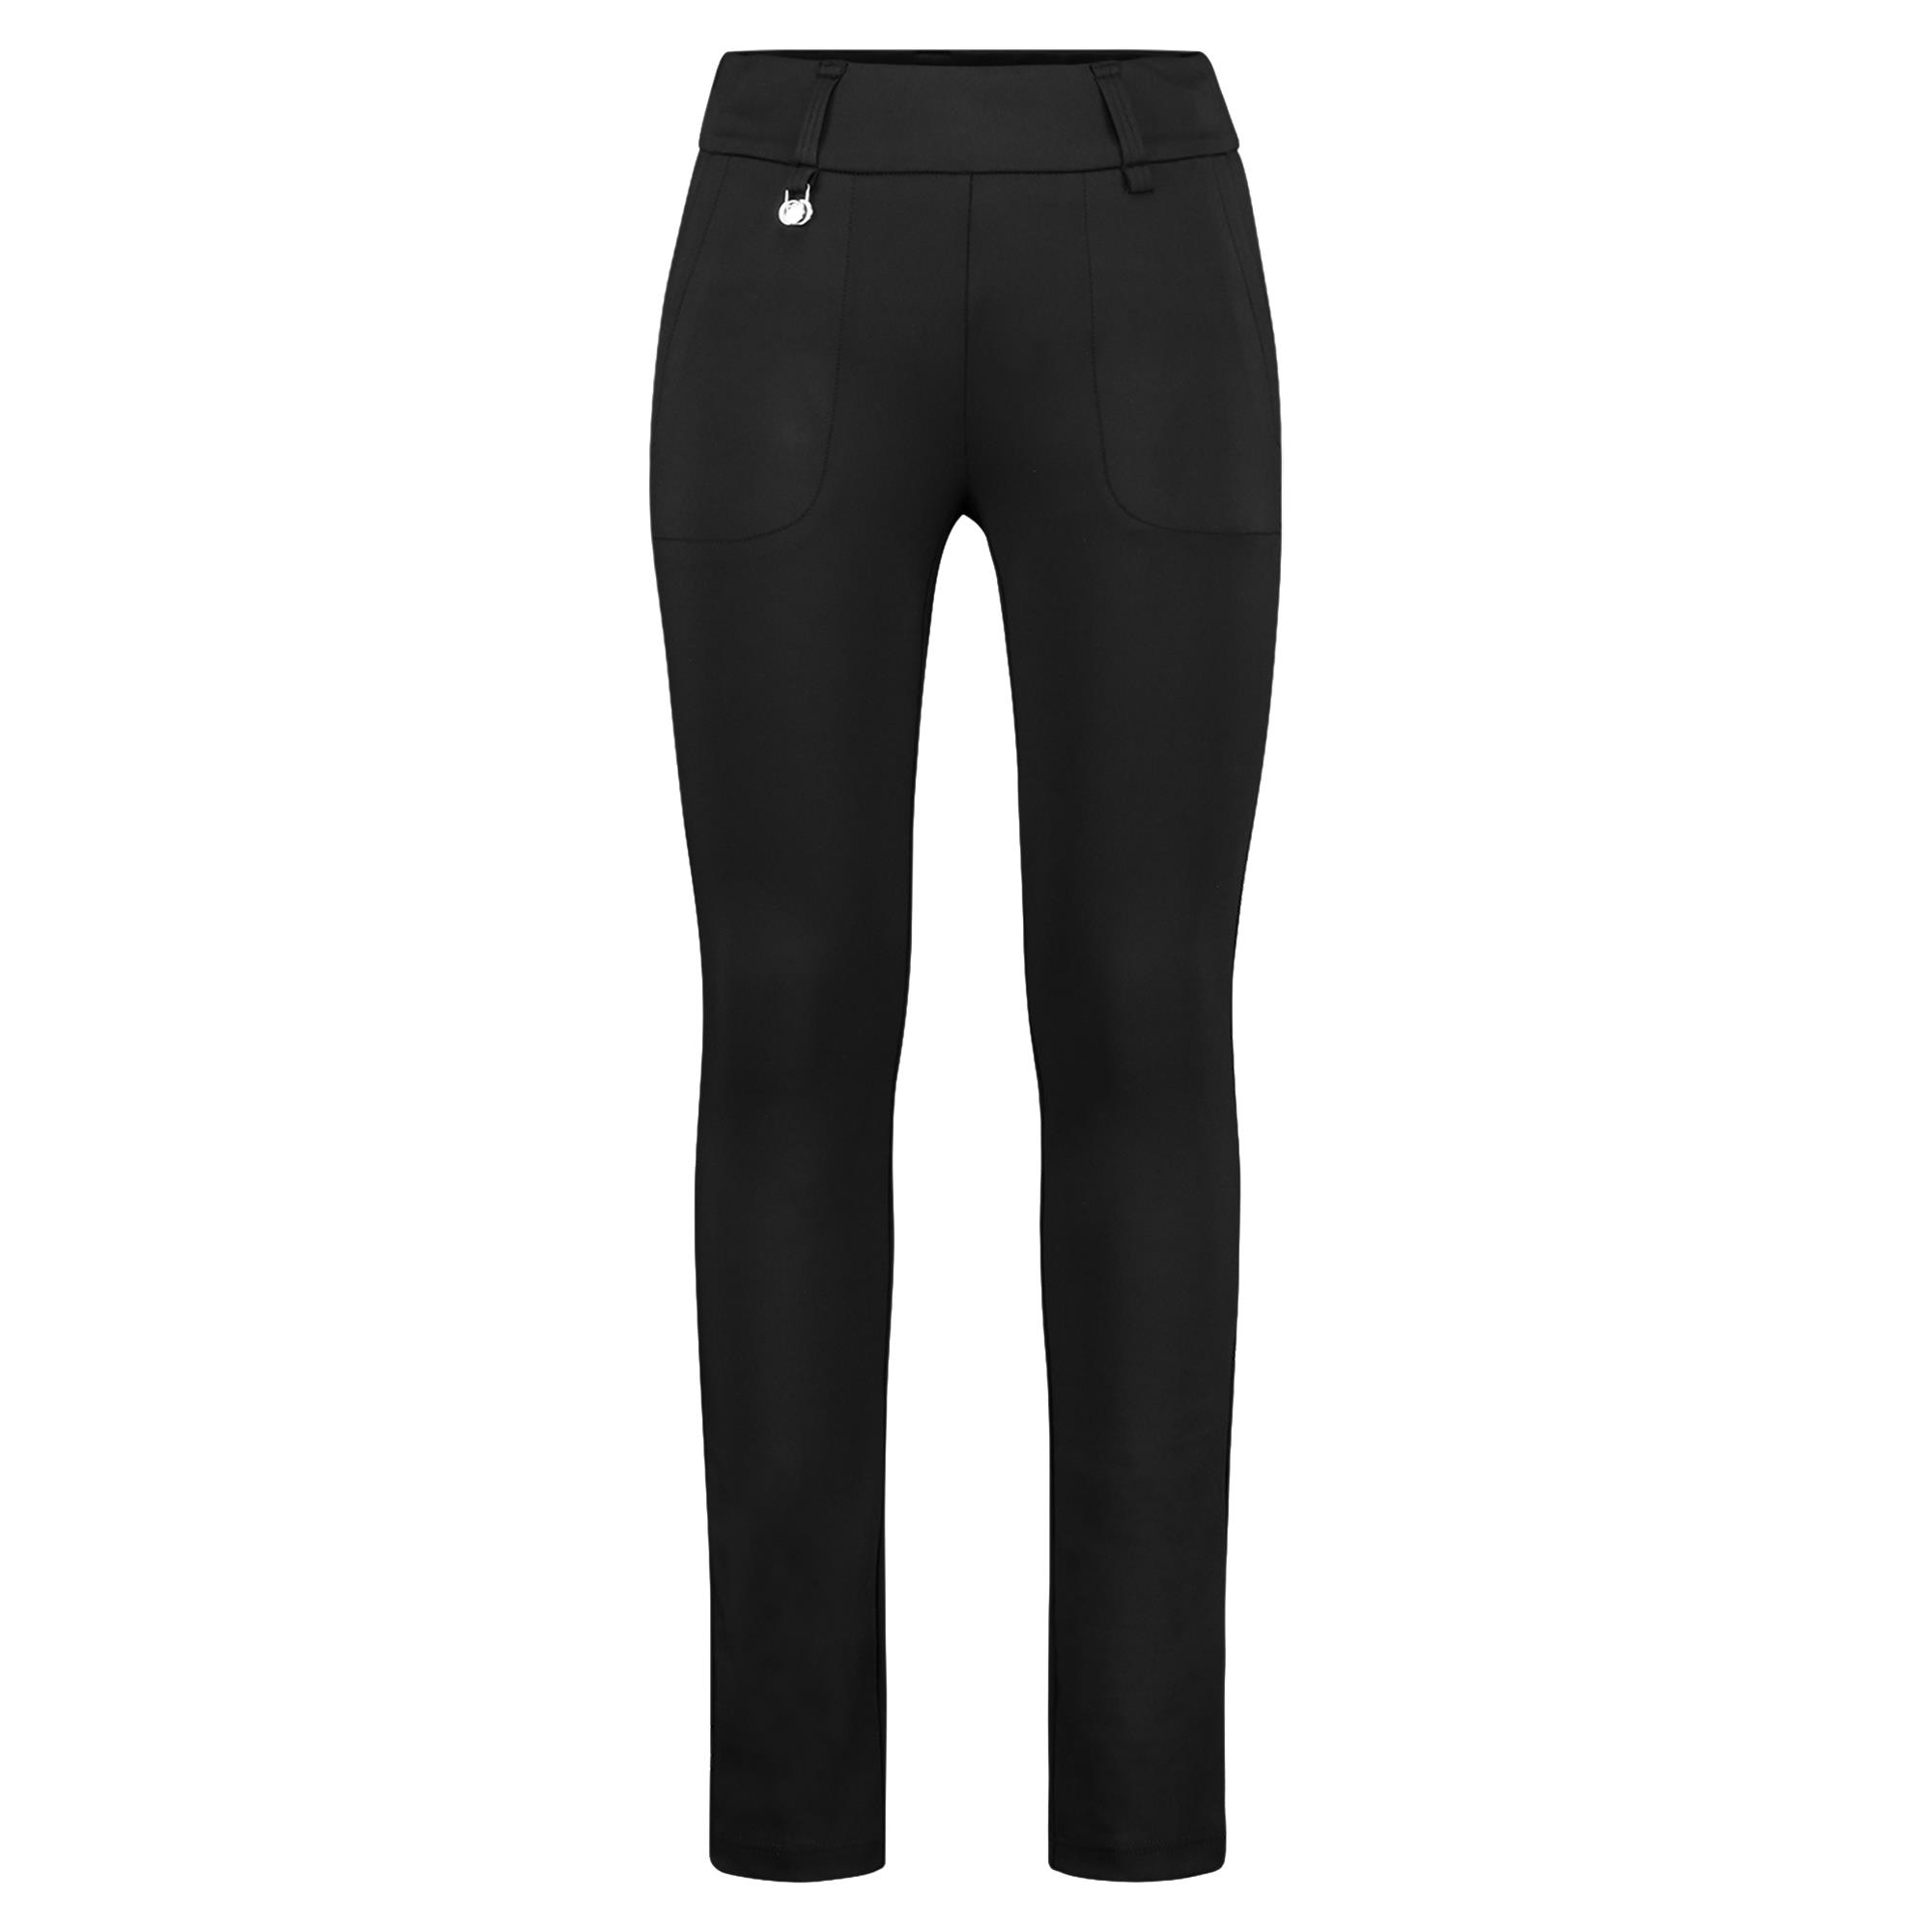 Trendy & Casual Pants for Women Australia - Ladies Pants Online - Tussah